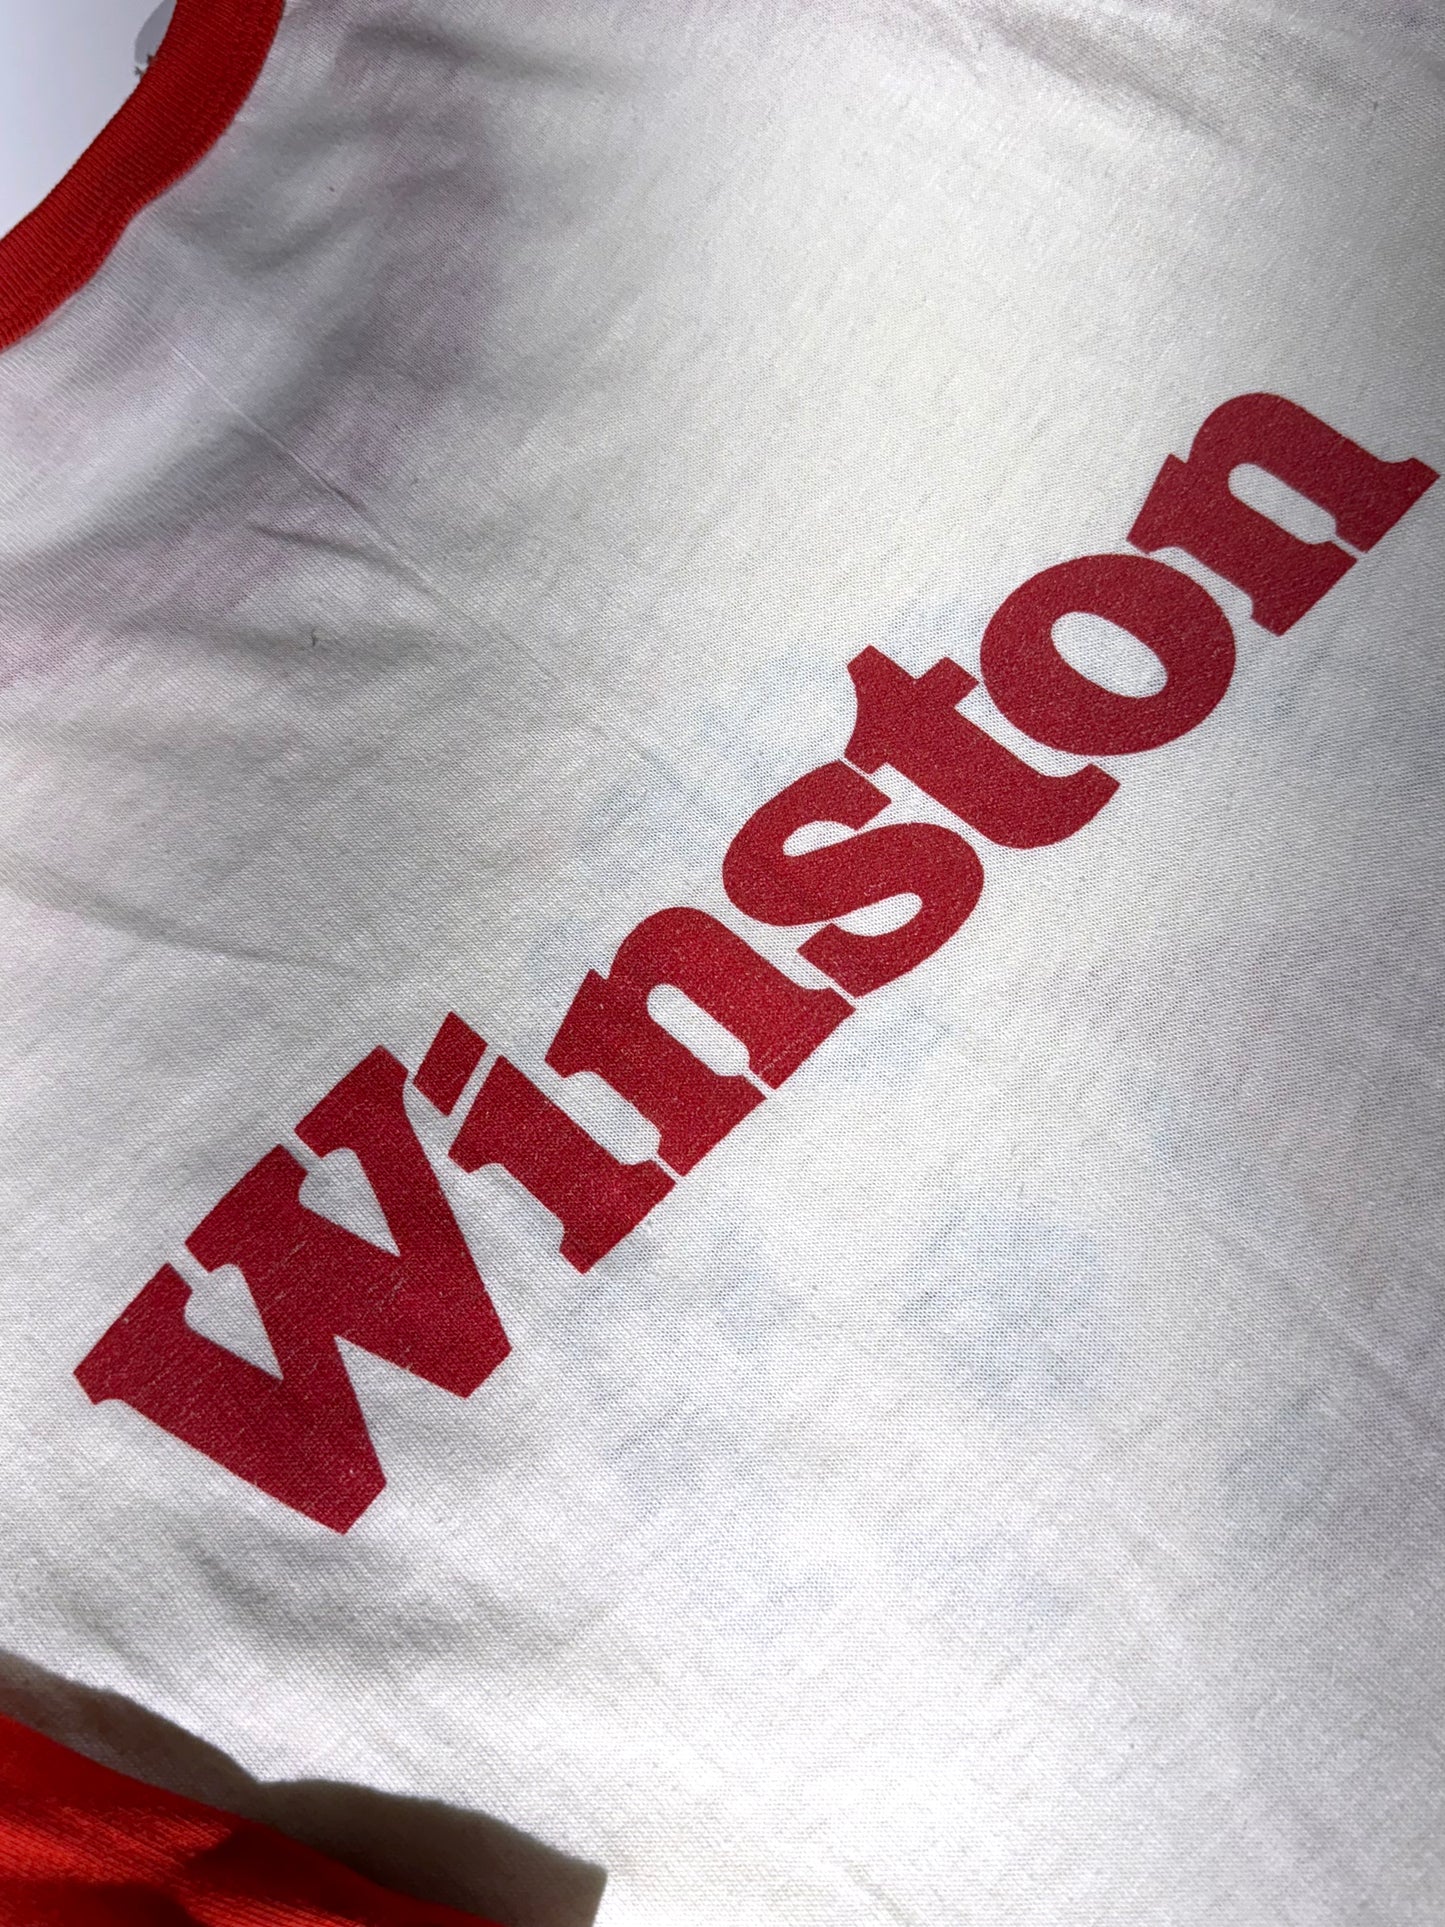 Vintage World Cup T-Shirt 80s Ringer Espana Winston USA Made Soccer